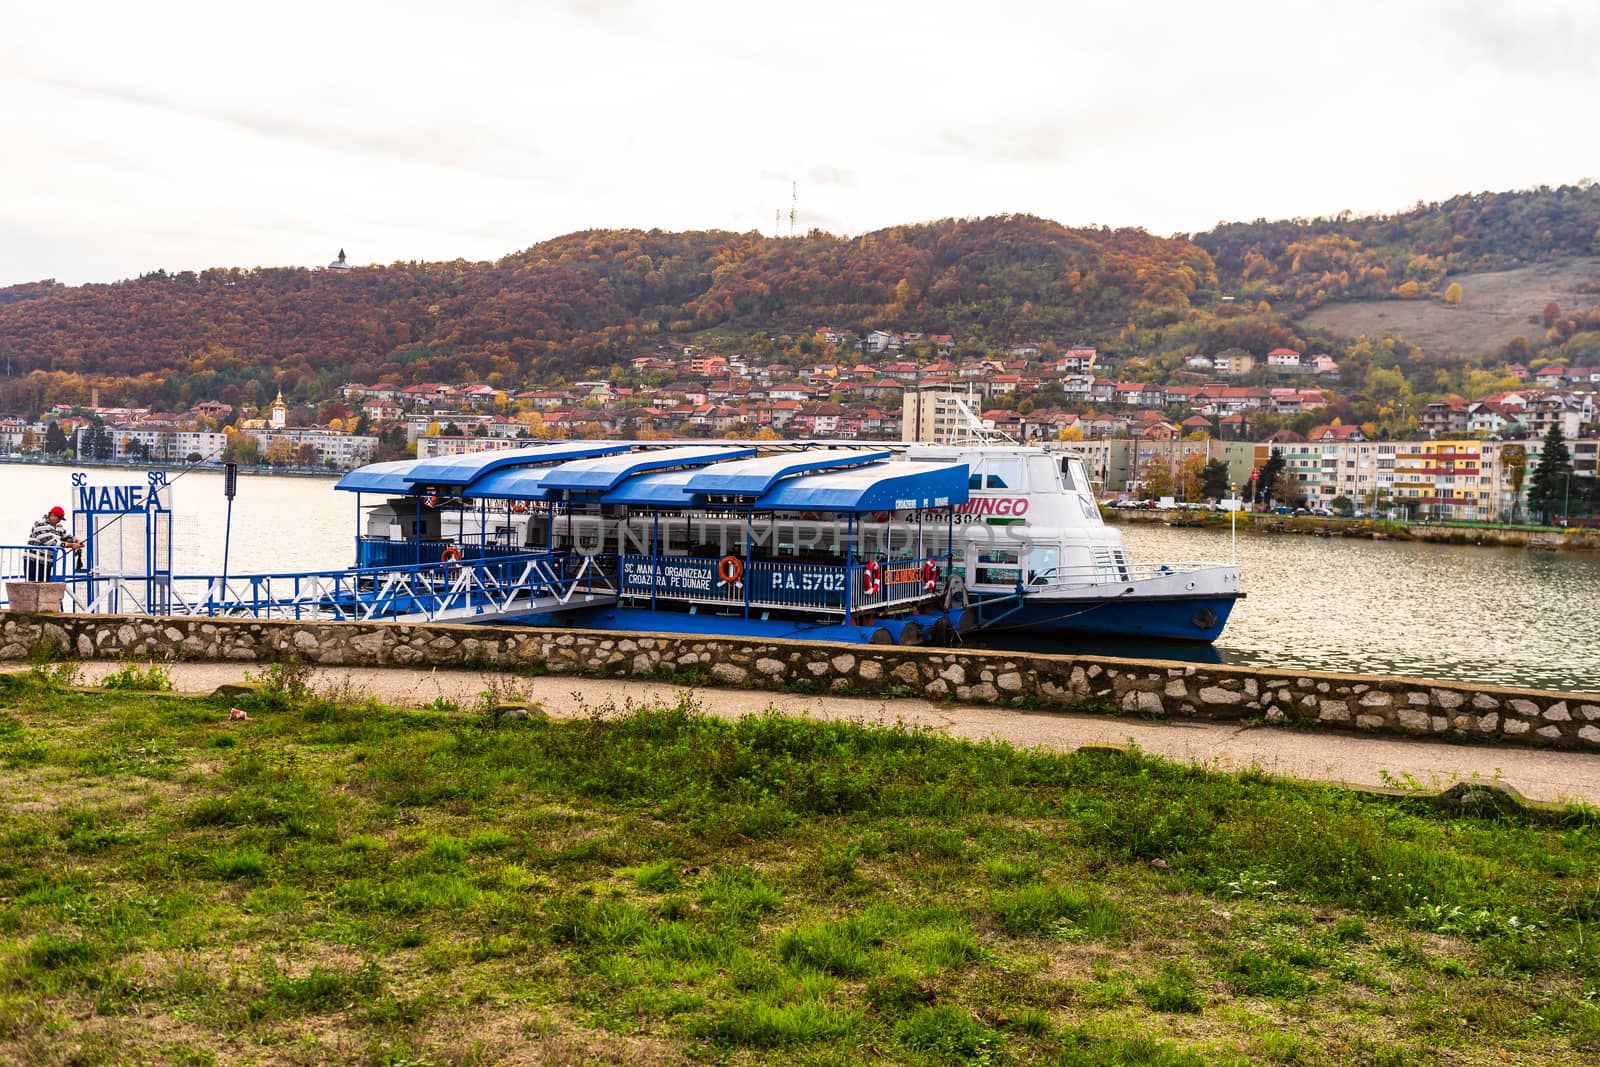 Old cruise ship, Danube river view from Orsova, Romania, 2020.